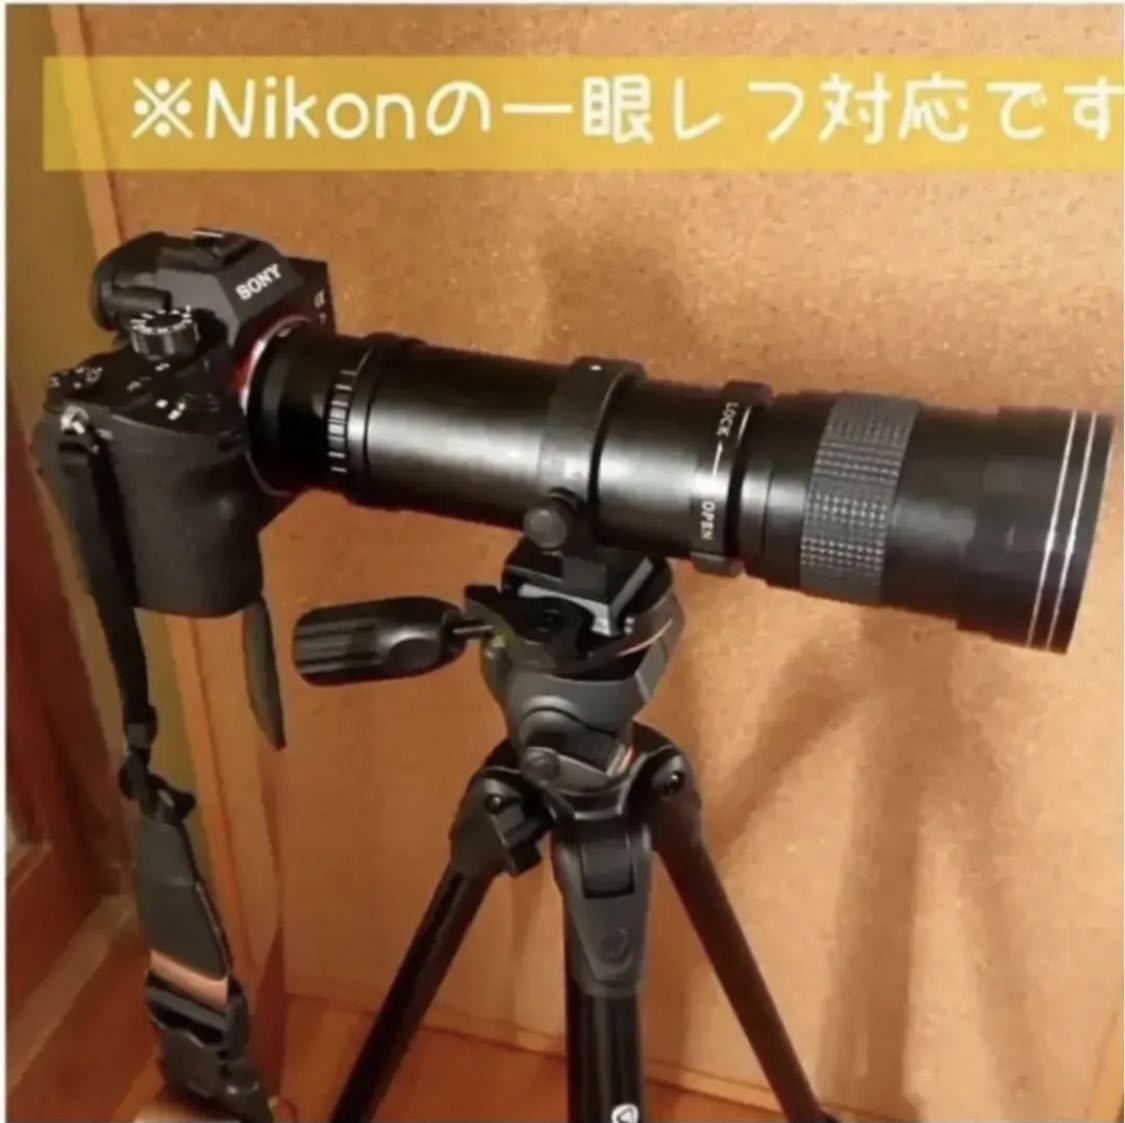 Nikon一眼レフカメラ に対応！スーパーズームレンズ！超望遠！遠くの